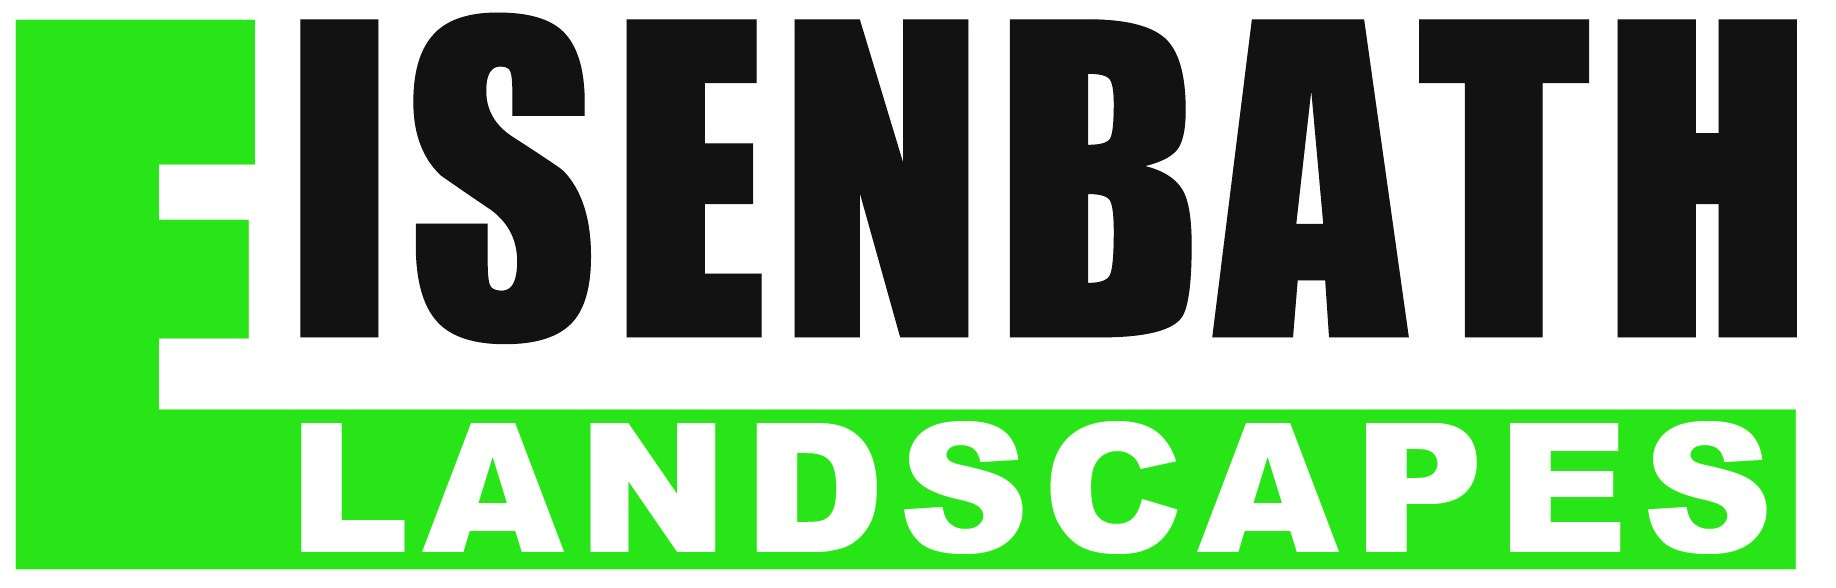 Eisenbath Landscapes Logo